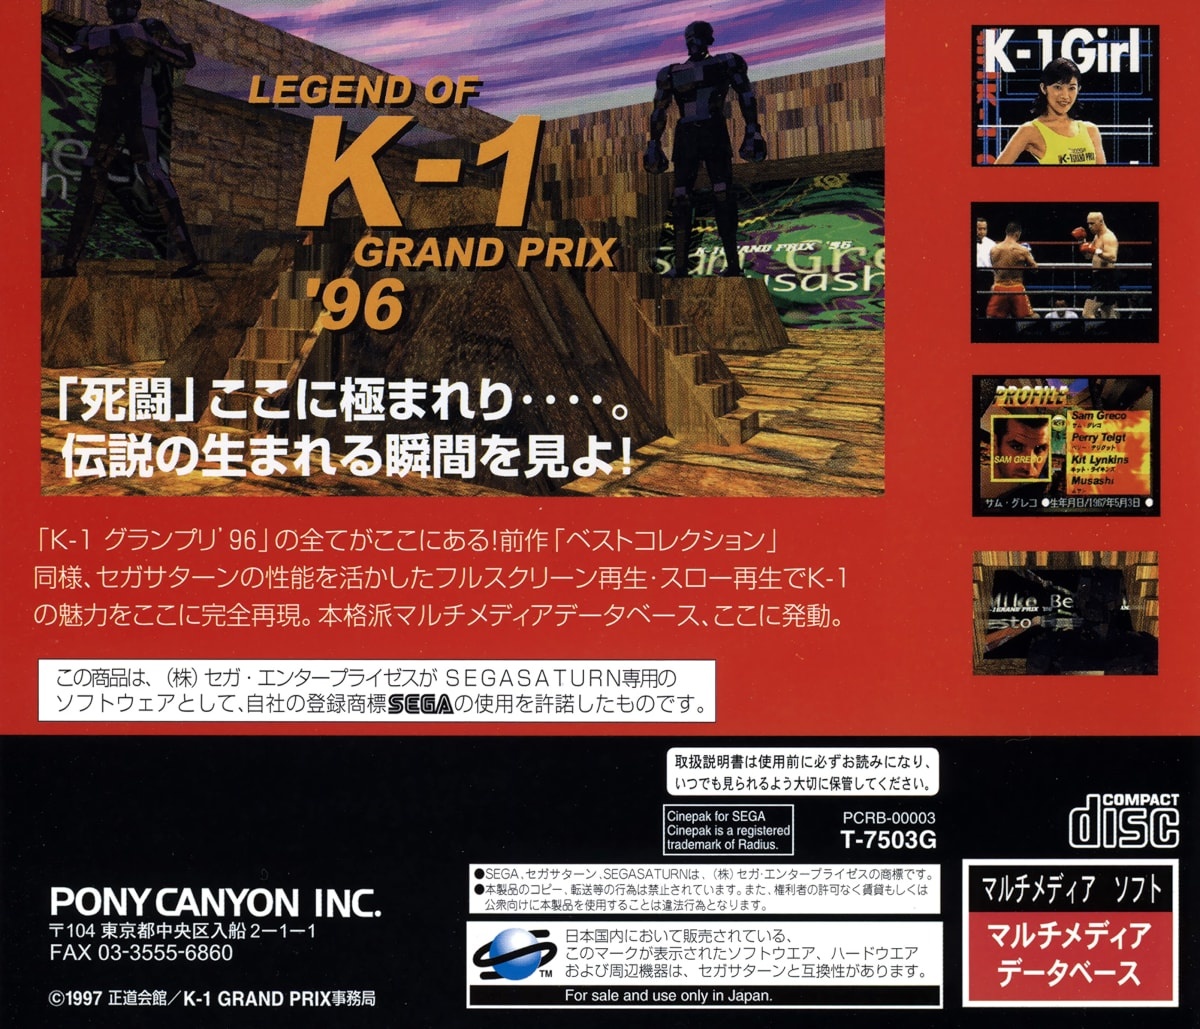 Legend of K-1 Grand Prix 96 cover